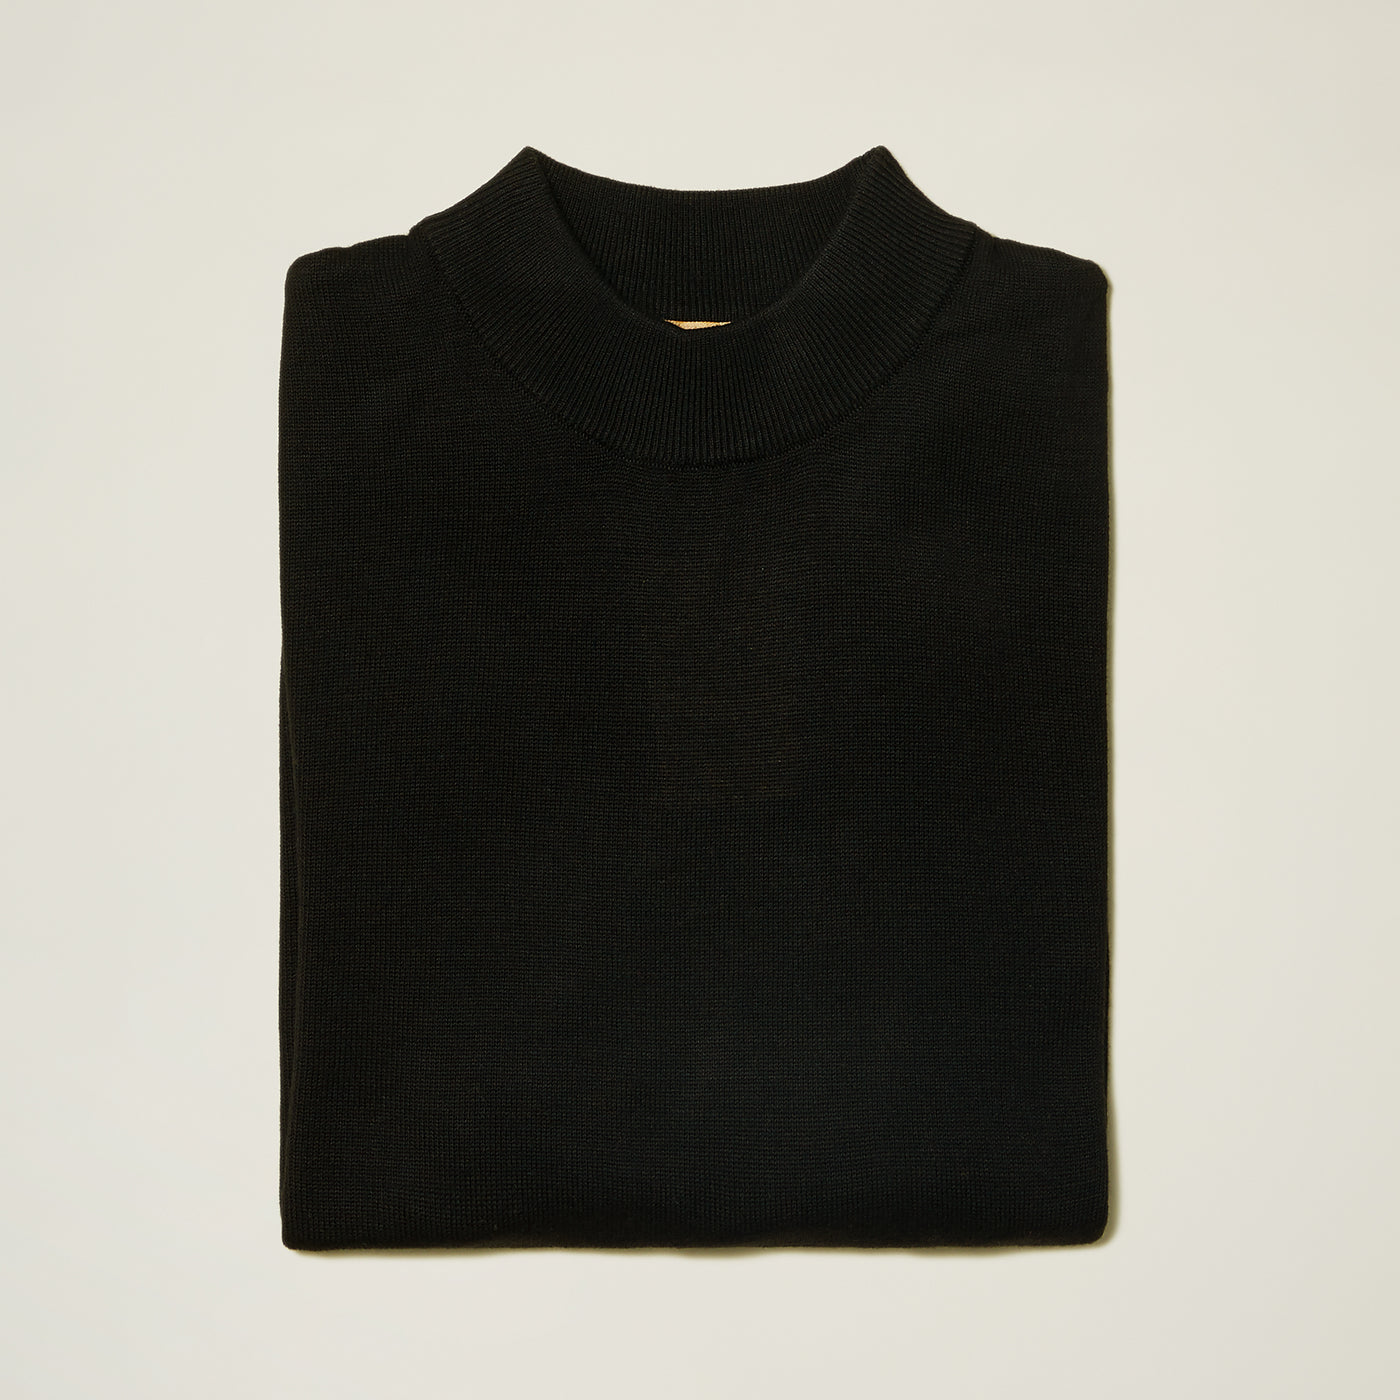 Cotton Blend Mock Neck Sweater - Black & Whites - INSERCH